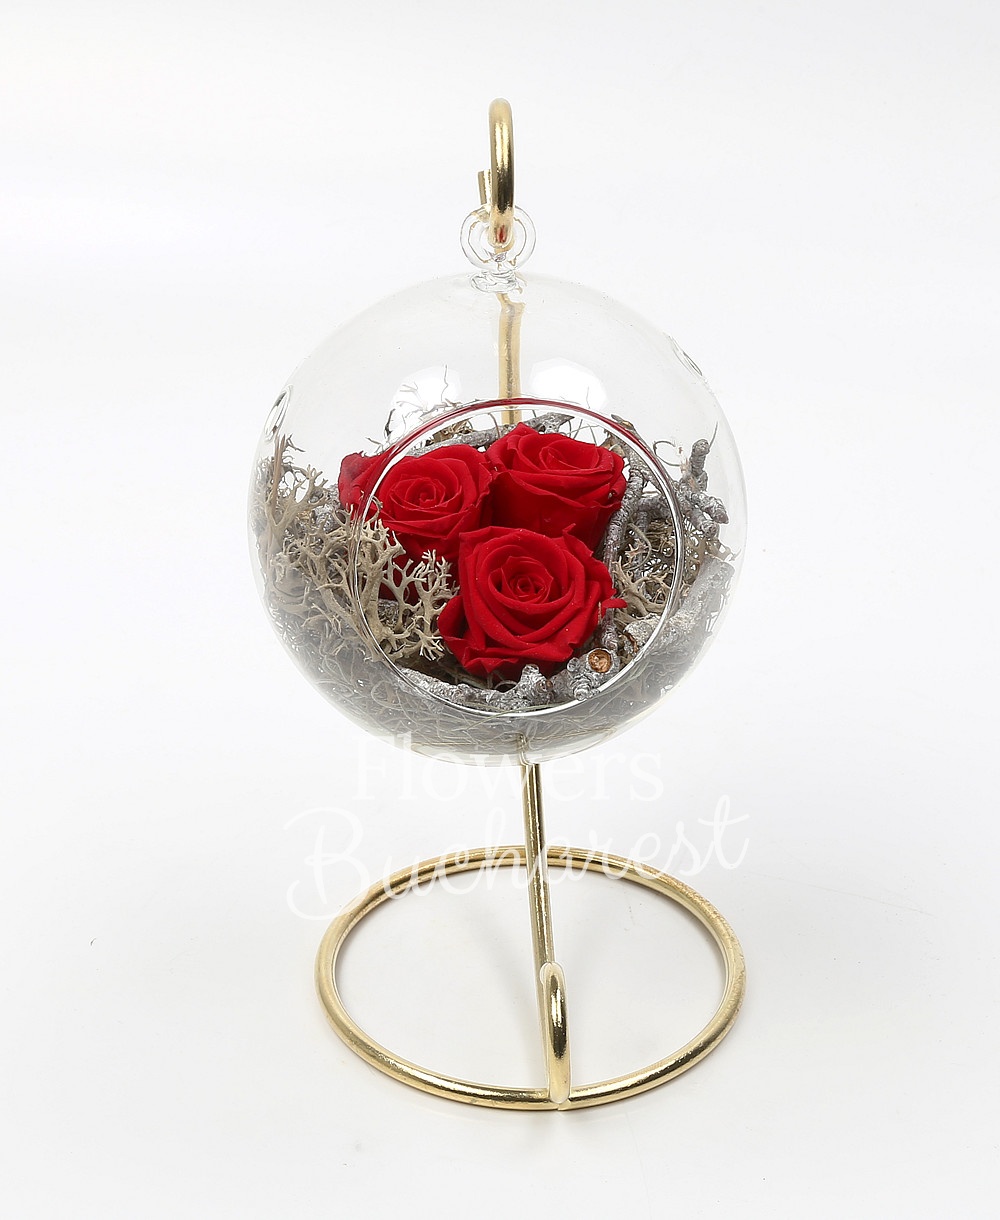 3 cryogenic roses in glass globe